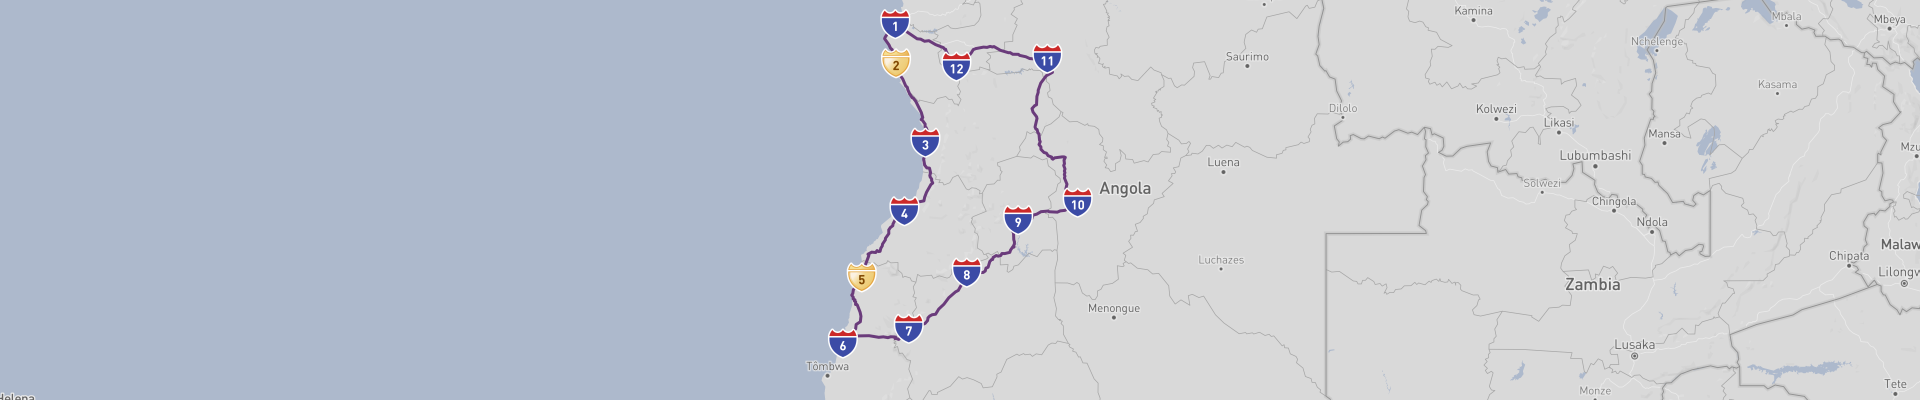 Angola Road Trip